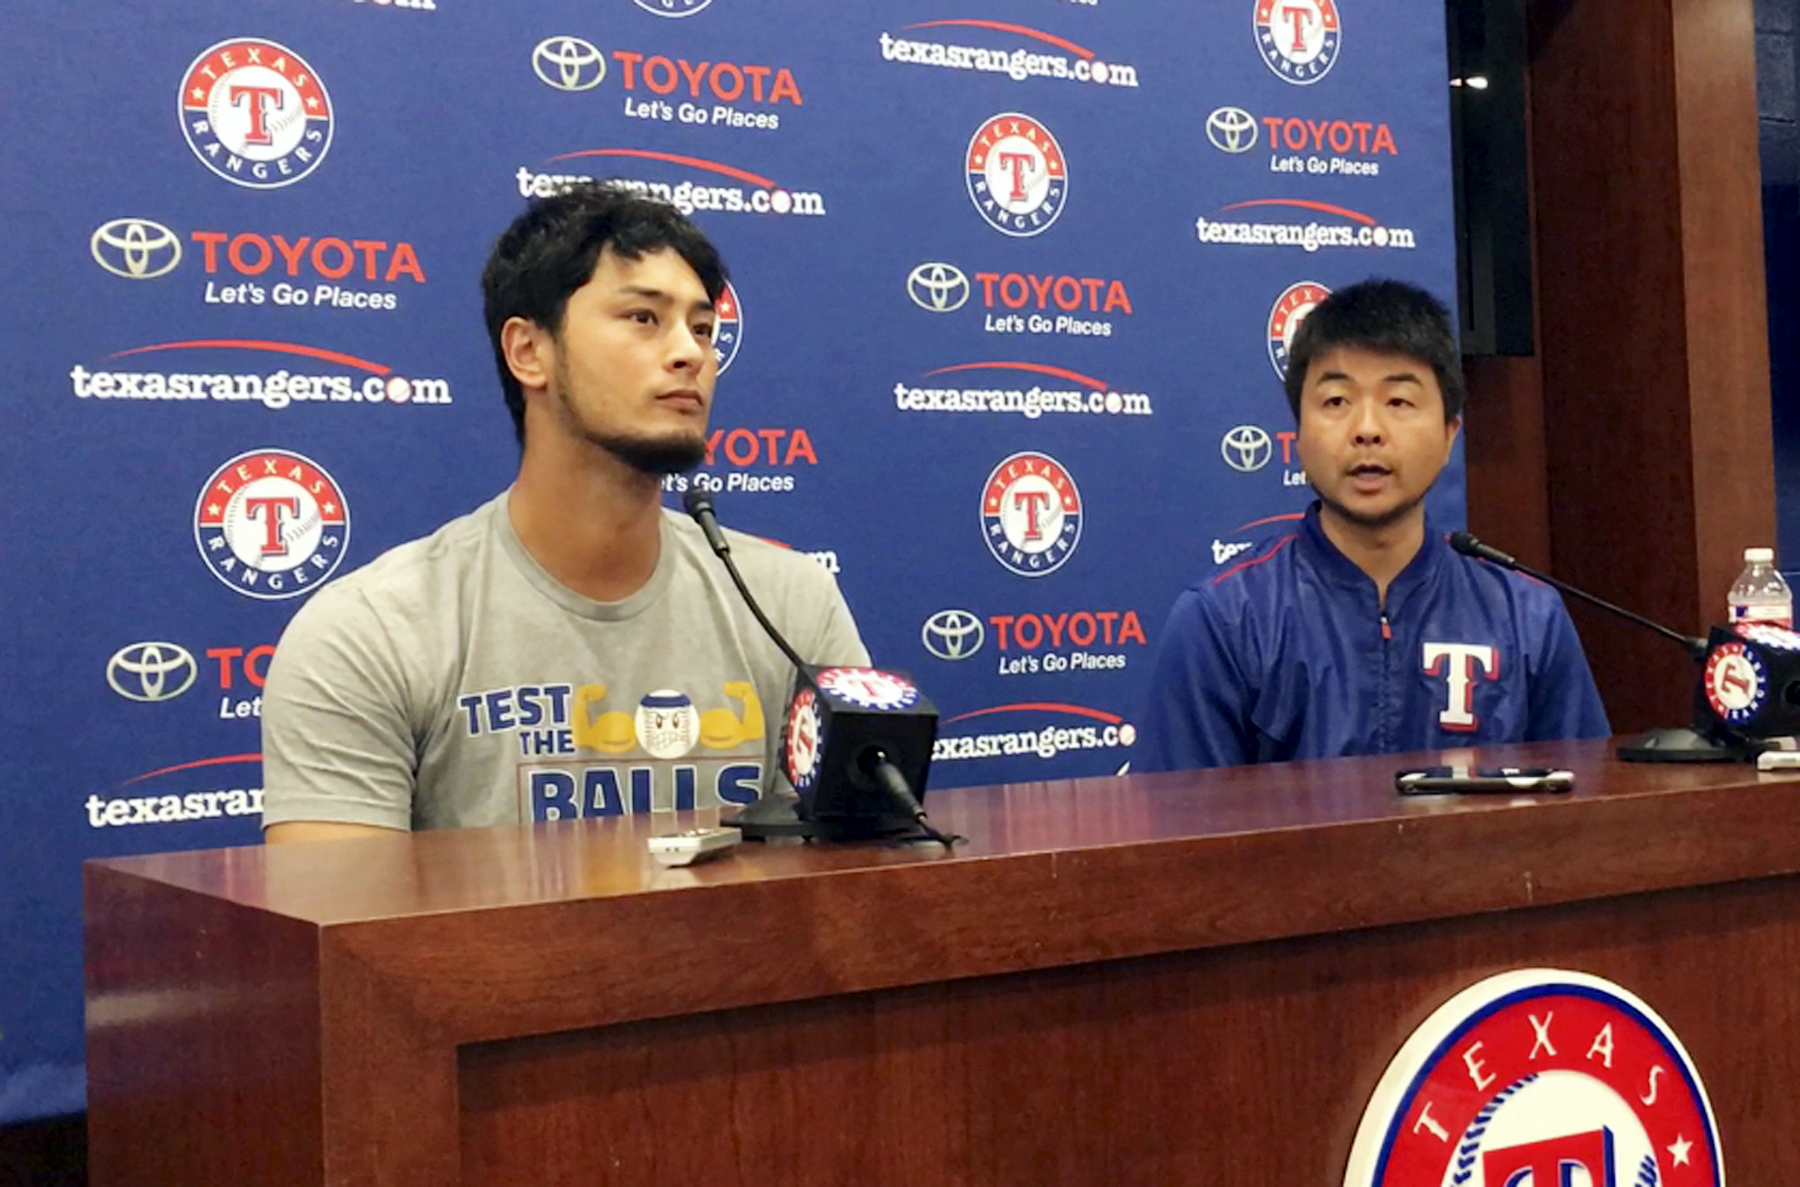 Baseball: Rangers' Darvish dealt to Dodgers, Astros' Aoki to Blue Jays